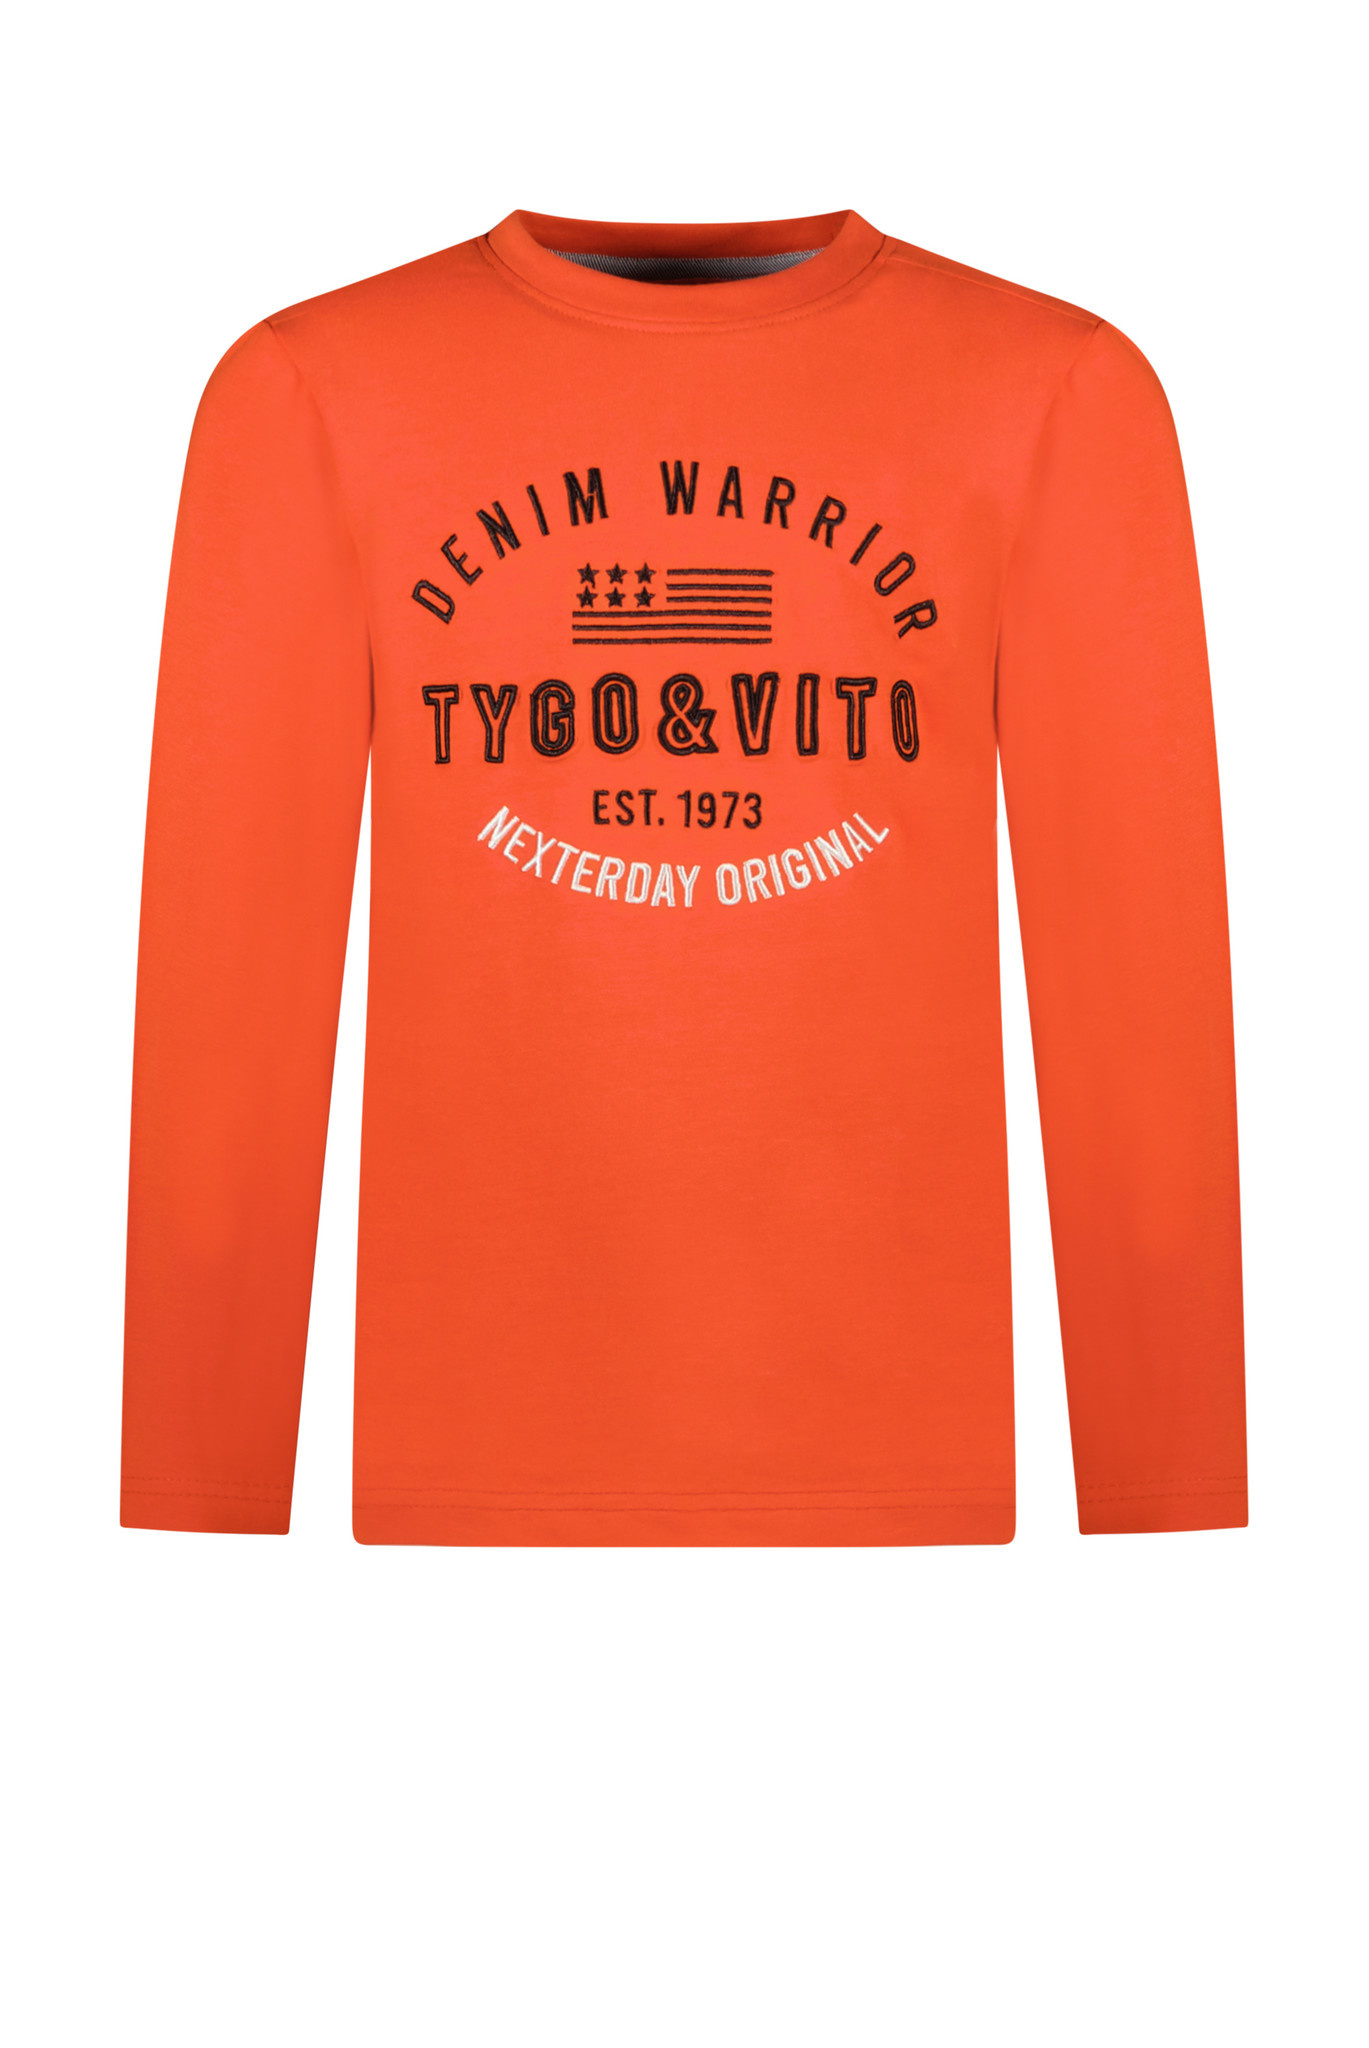 Tygo & Vito Jongens shirt denim warrior - Donker oranje